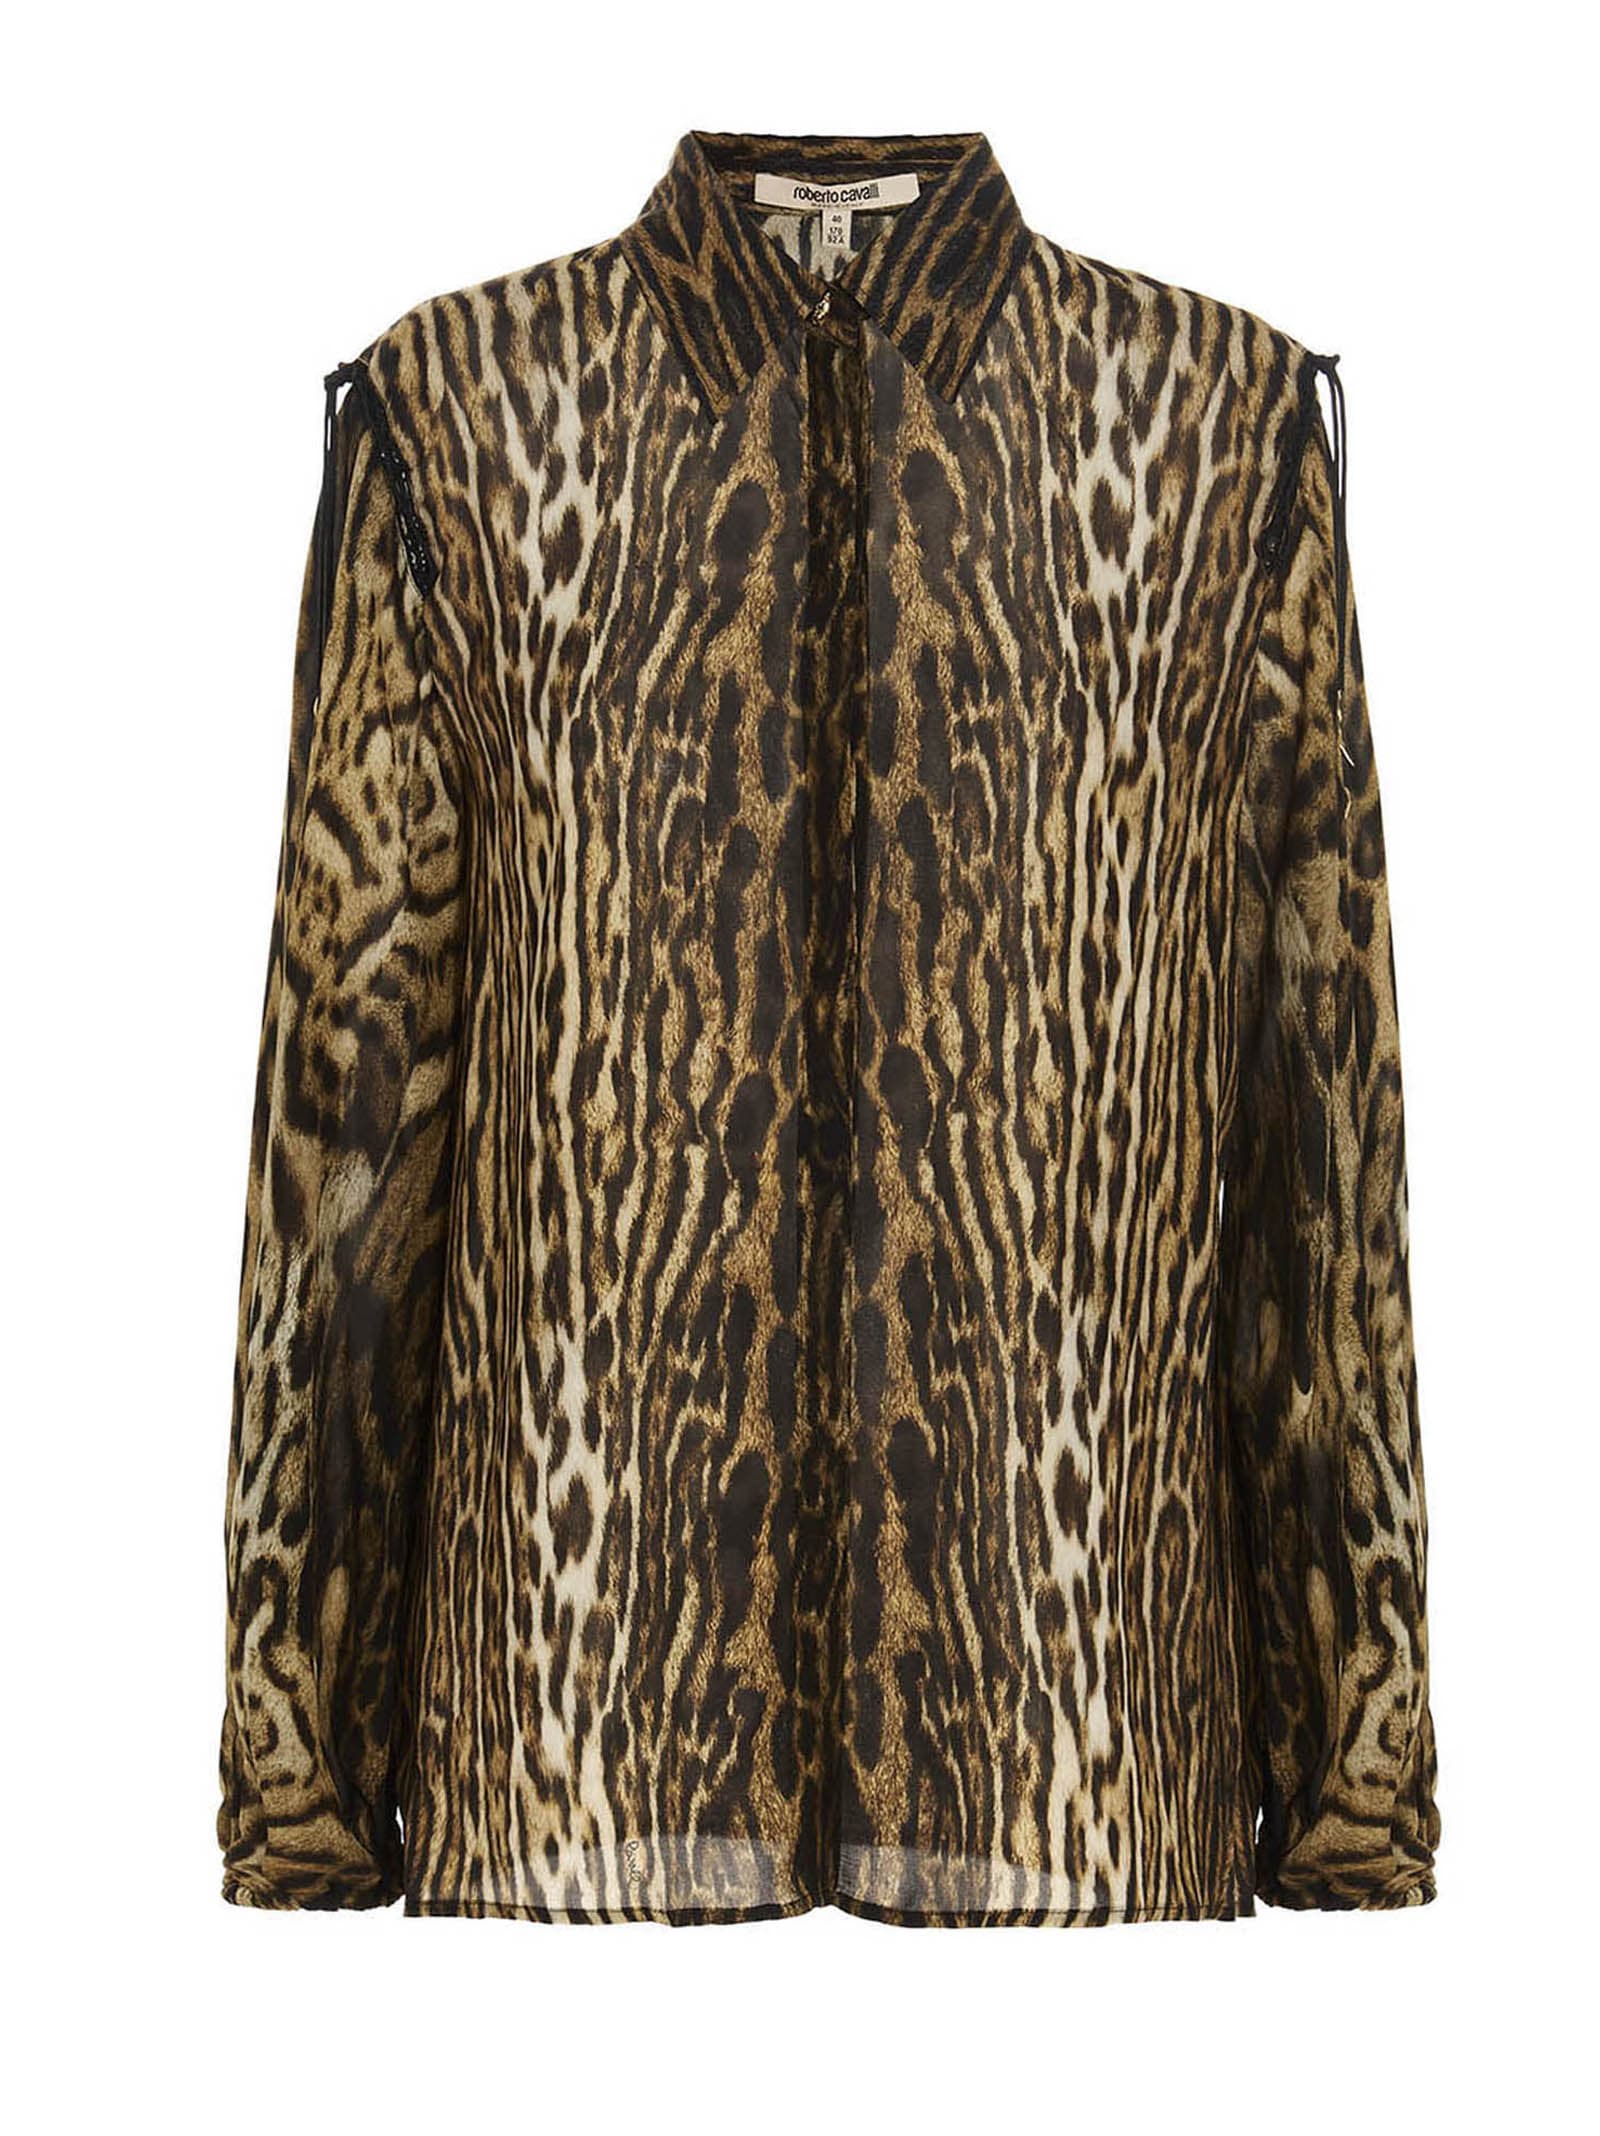 Roberto Cavalli leopard Shirt